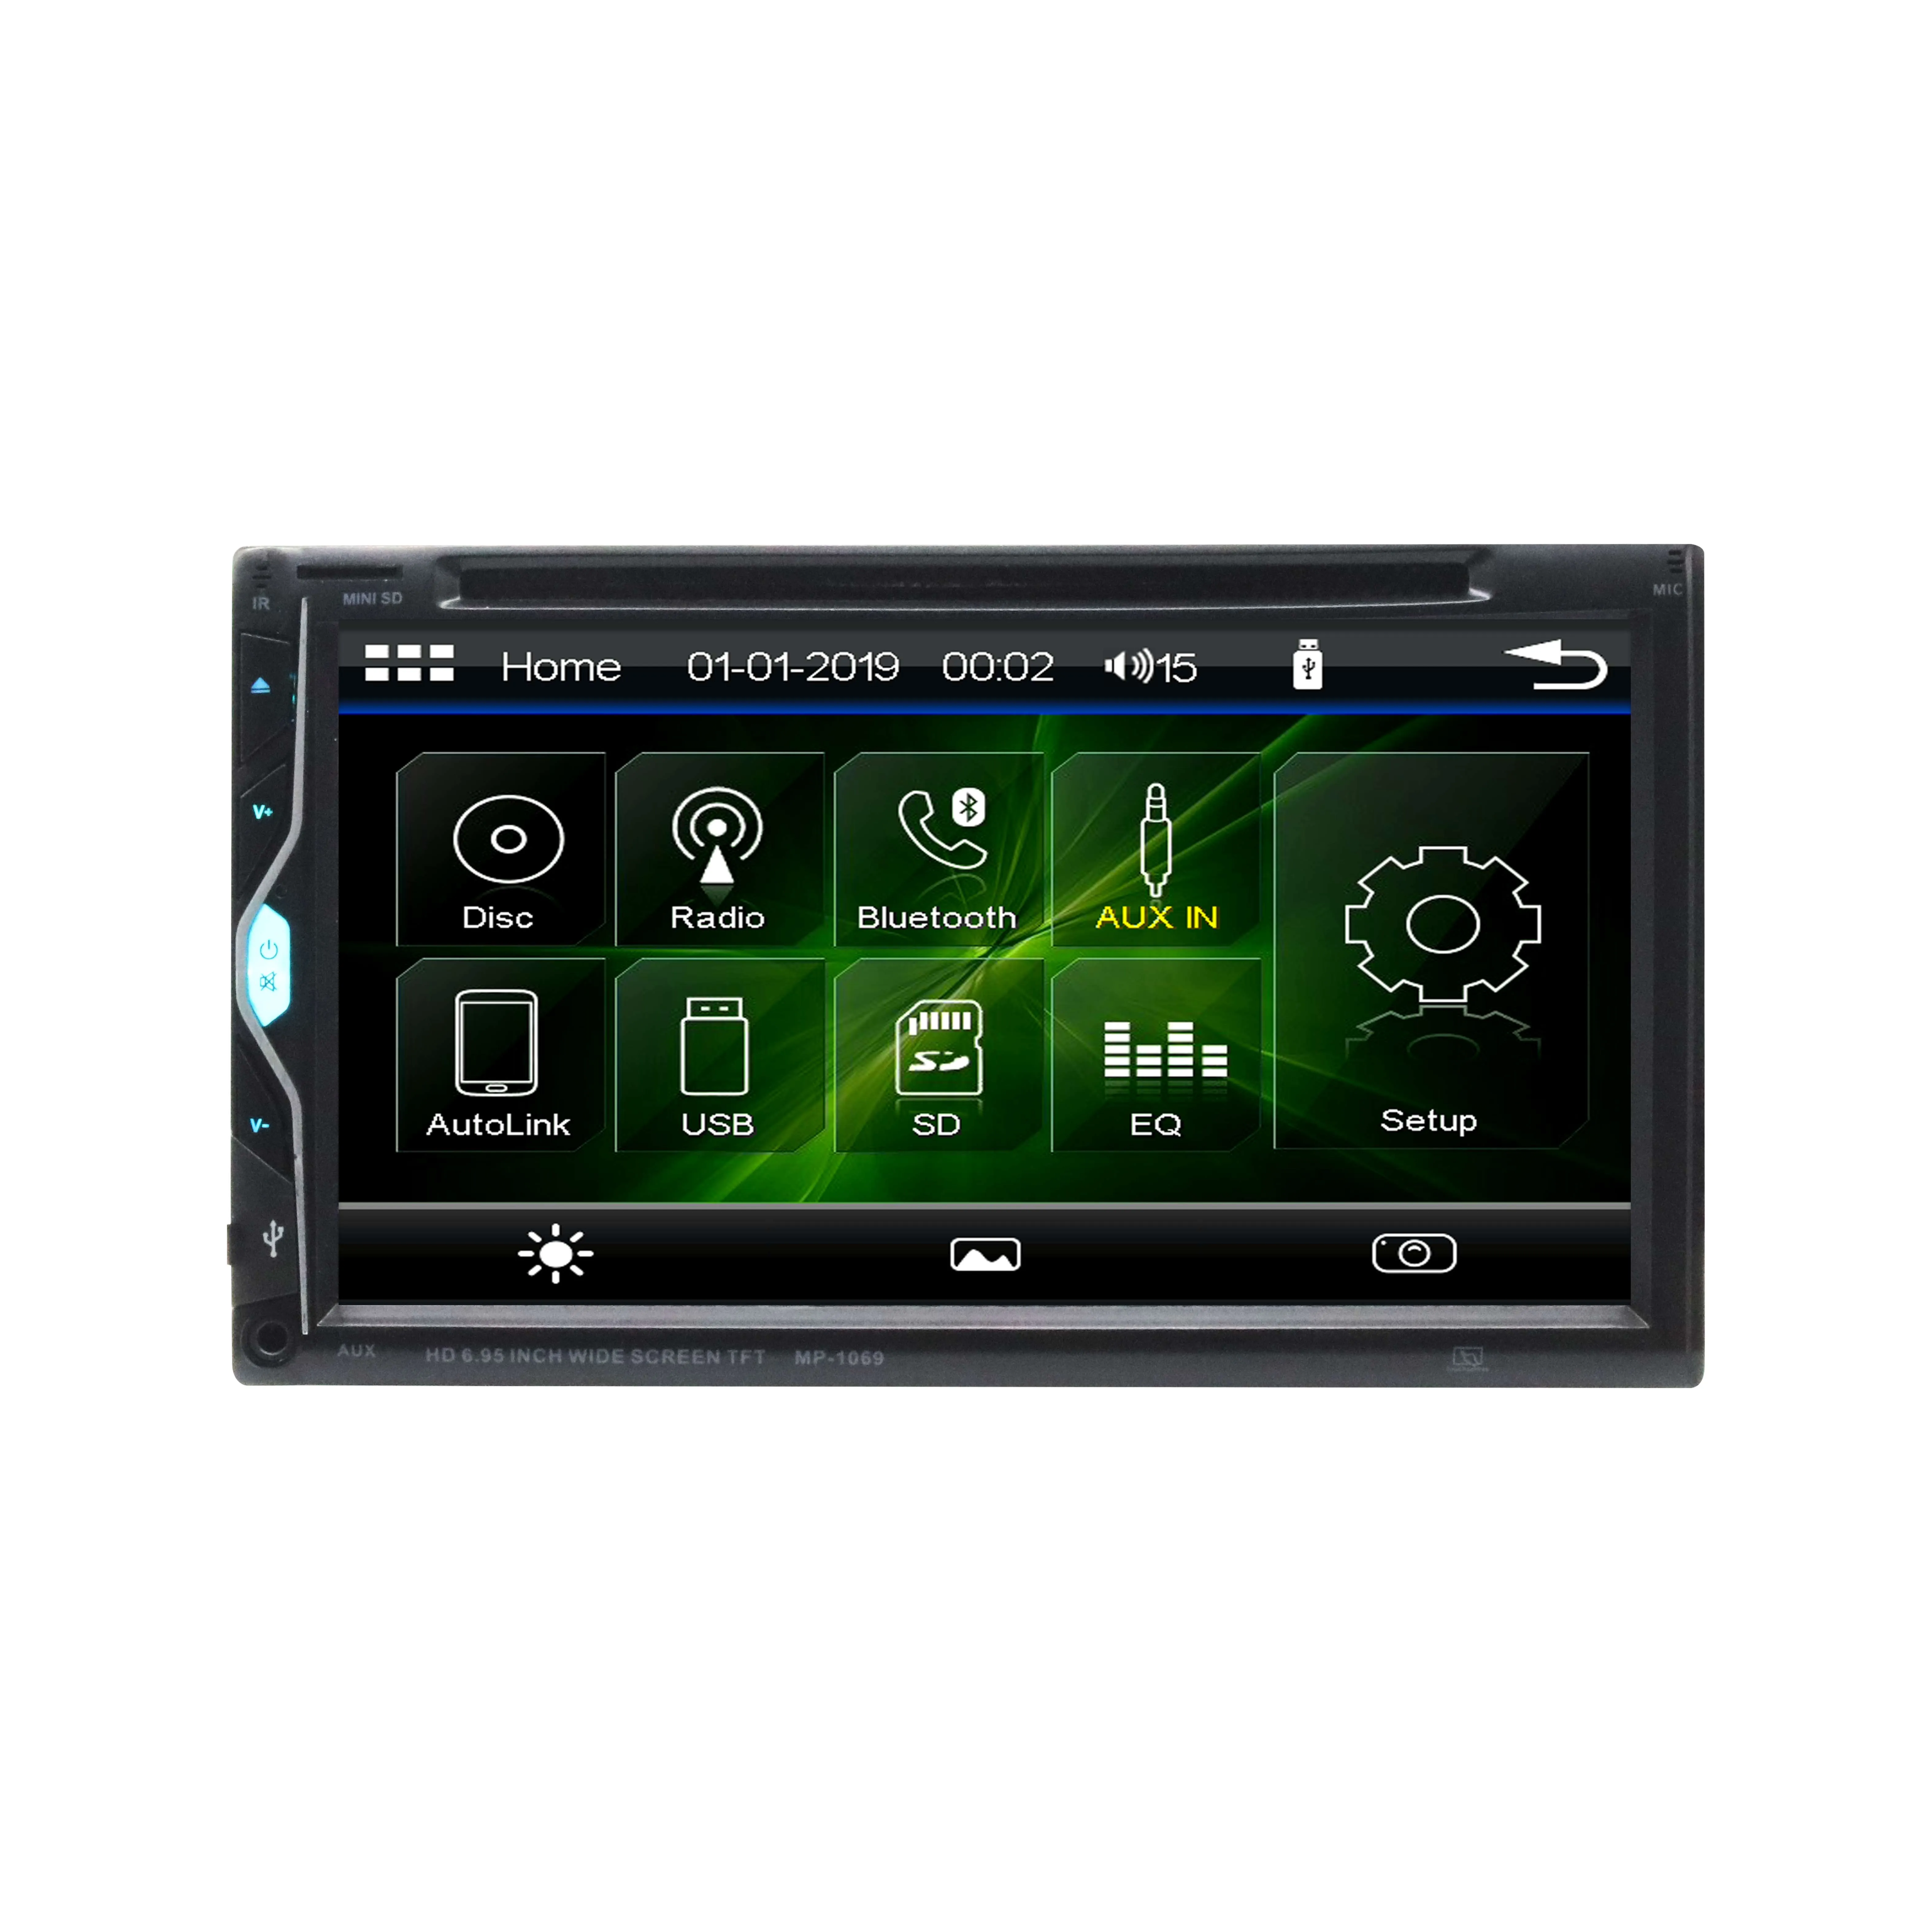 Autoradio 2 Din Android 13 mit GPS Navi und Bluetooth 7 Zoll Touchscreen  Doppel Din Stereo Radio Display mit WiFi FM/RDS Radio Spiegel-Link AUX-in +  Rückfahrkamera: : Elektronik & Foto